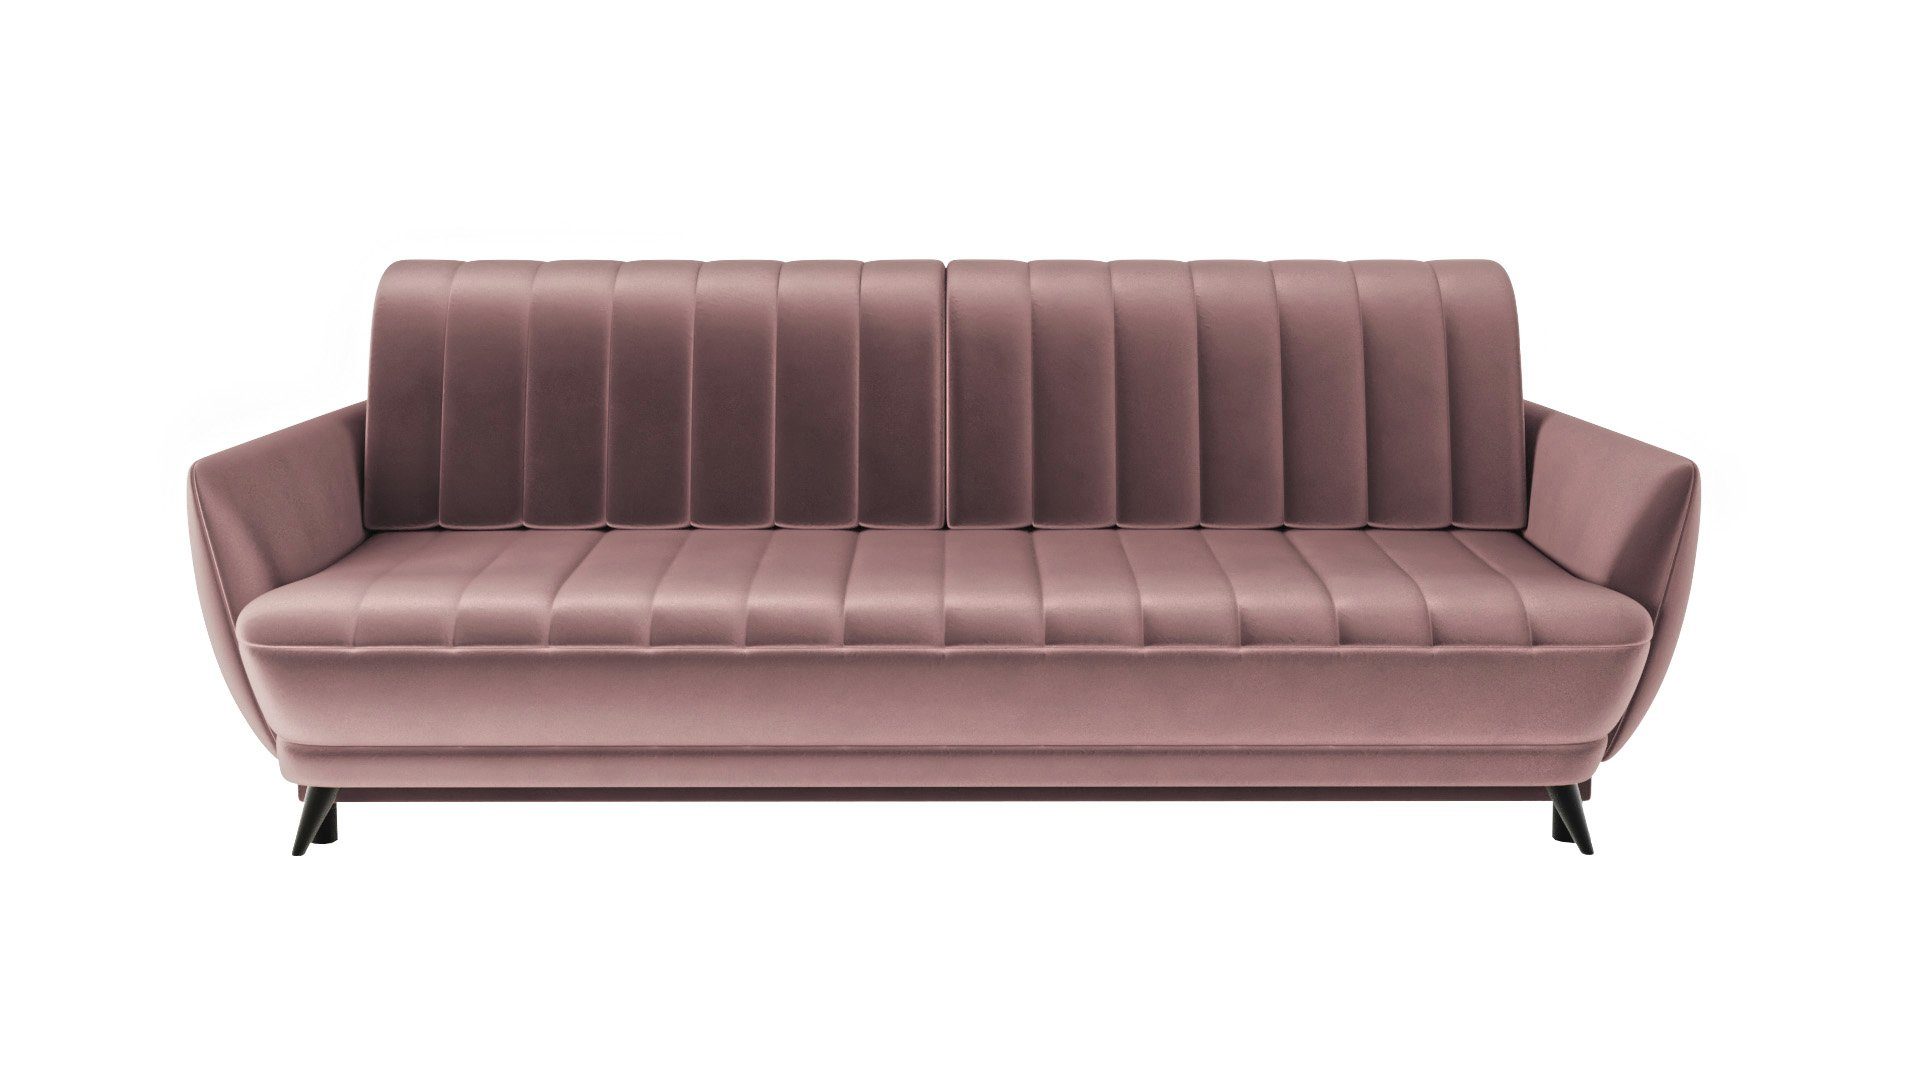 Siblo 3-Sitzer Dreisitziges Elegantes Sofa Rolo 3 - bequemes Sofa - 3-Sitzer Sofa - modernes Wohnzimmer Rosa